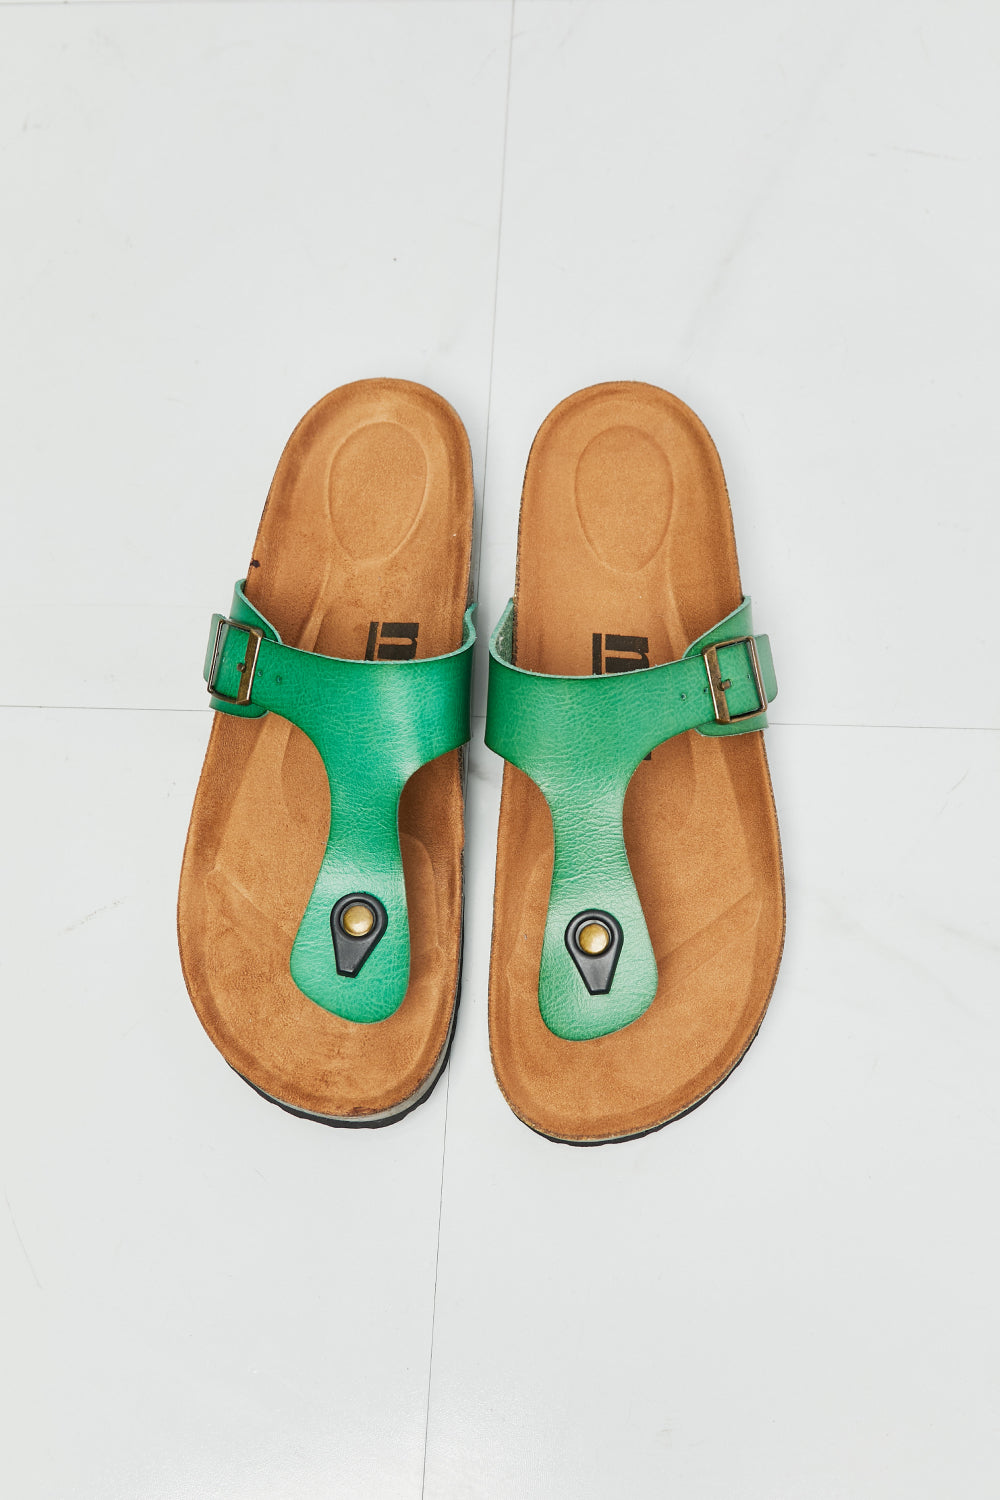 MMShoes Drift Away T-Strap Flip-Flop in Green - nailedmoms